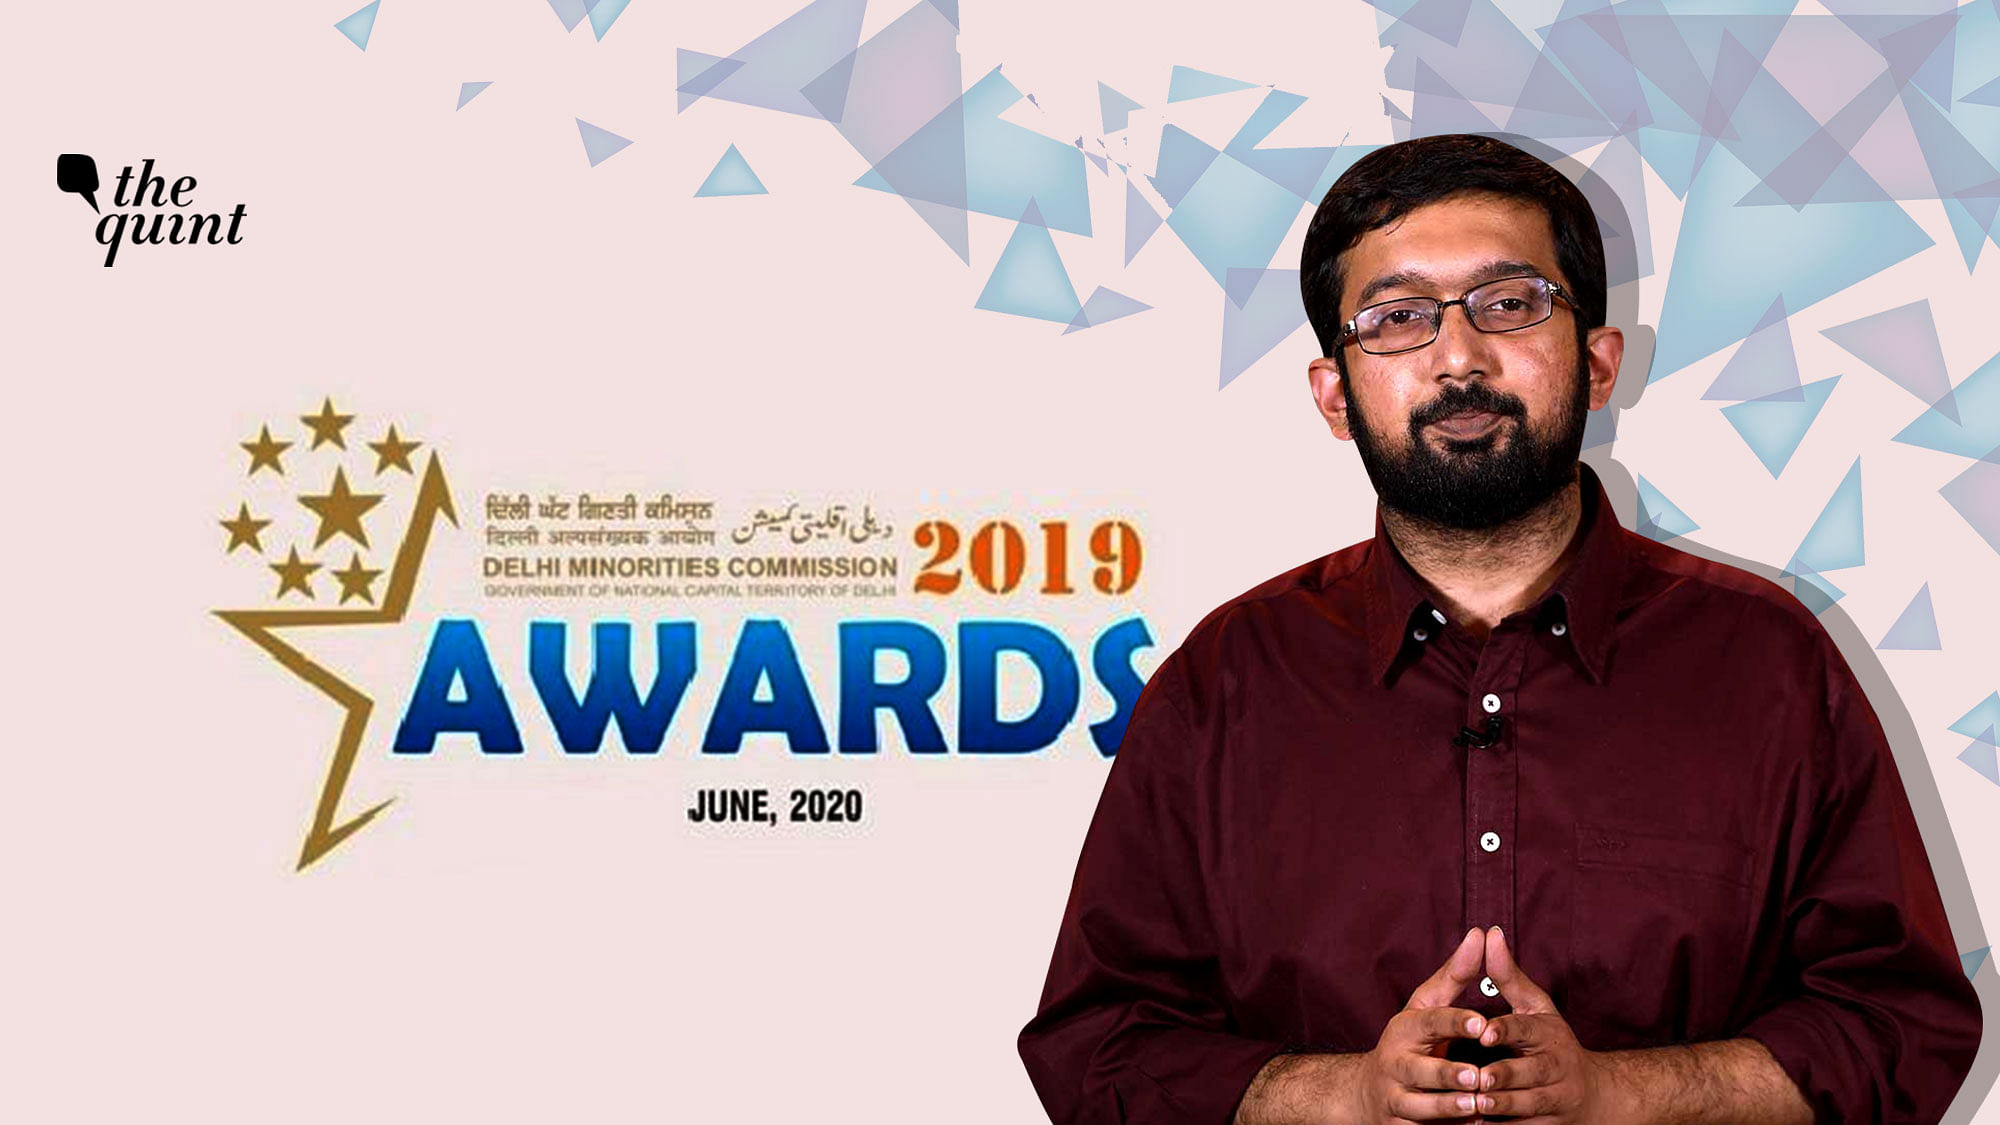 The Quint’s Aditya Menon has won an award by Delhi Minorities Commission.